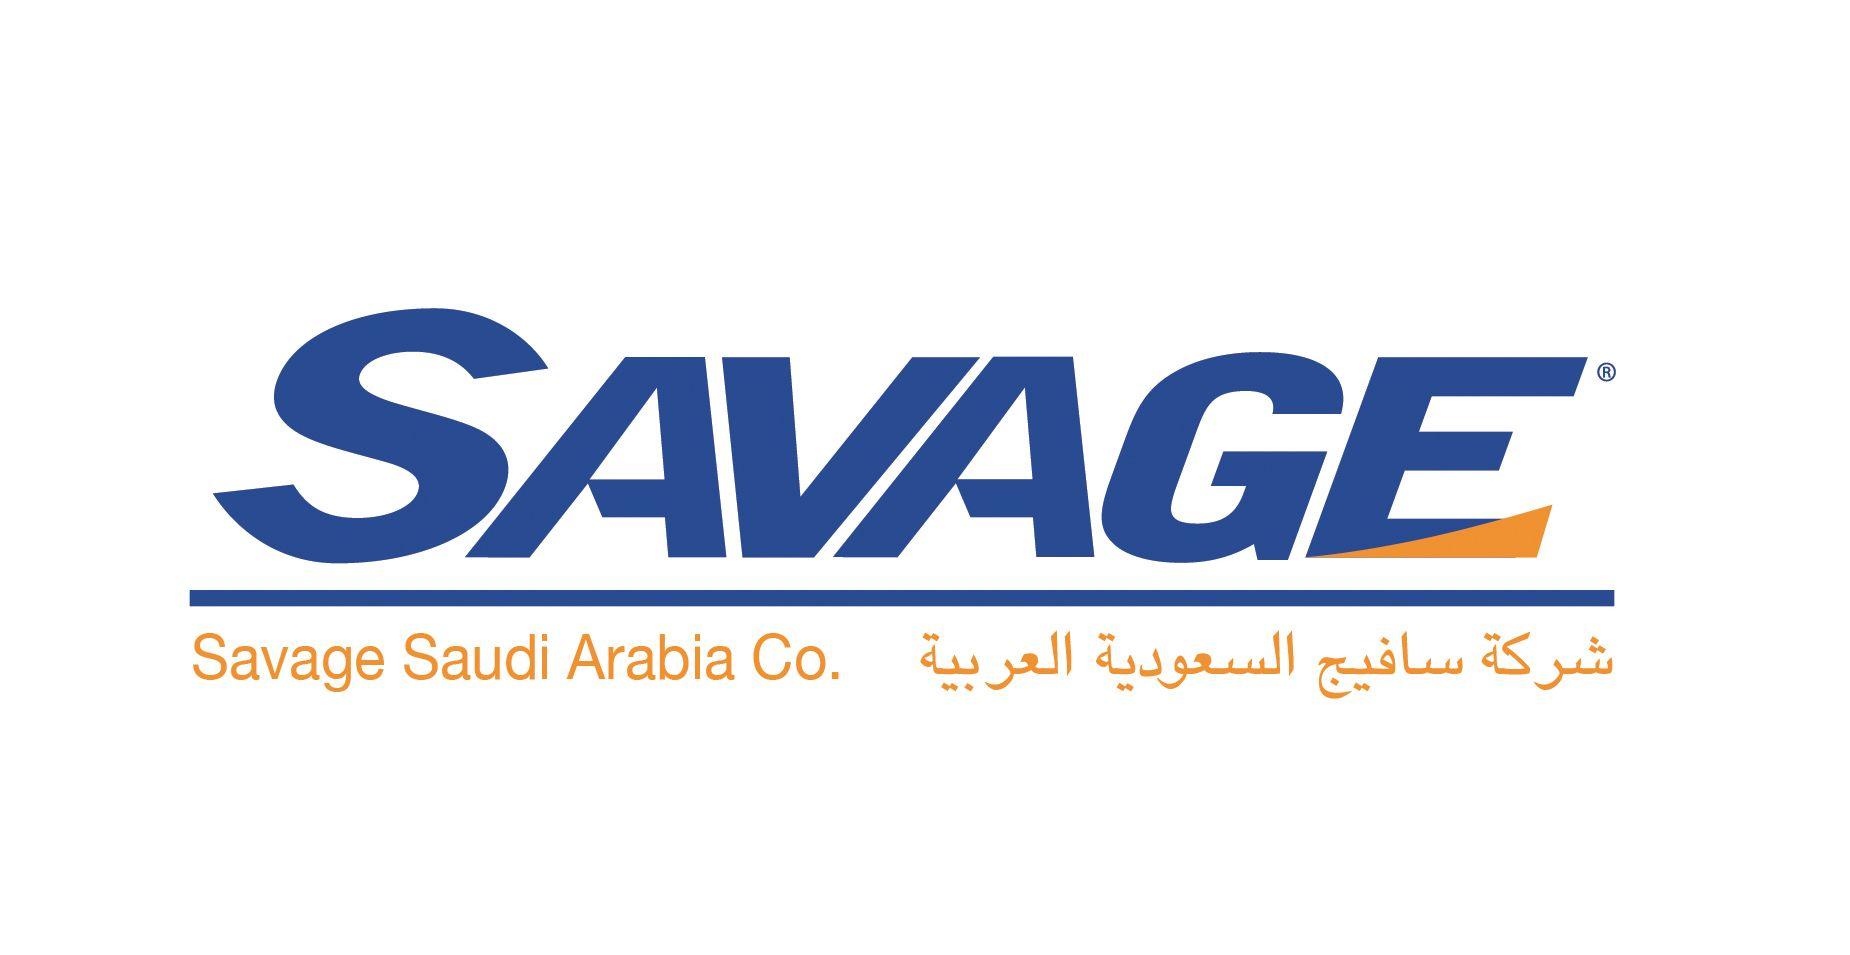 Savage Equipment Logo - Savage Saudi Arabia Delivers Locomotives and Equipment to Support